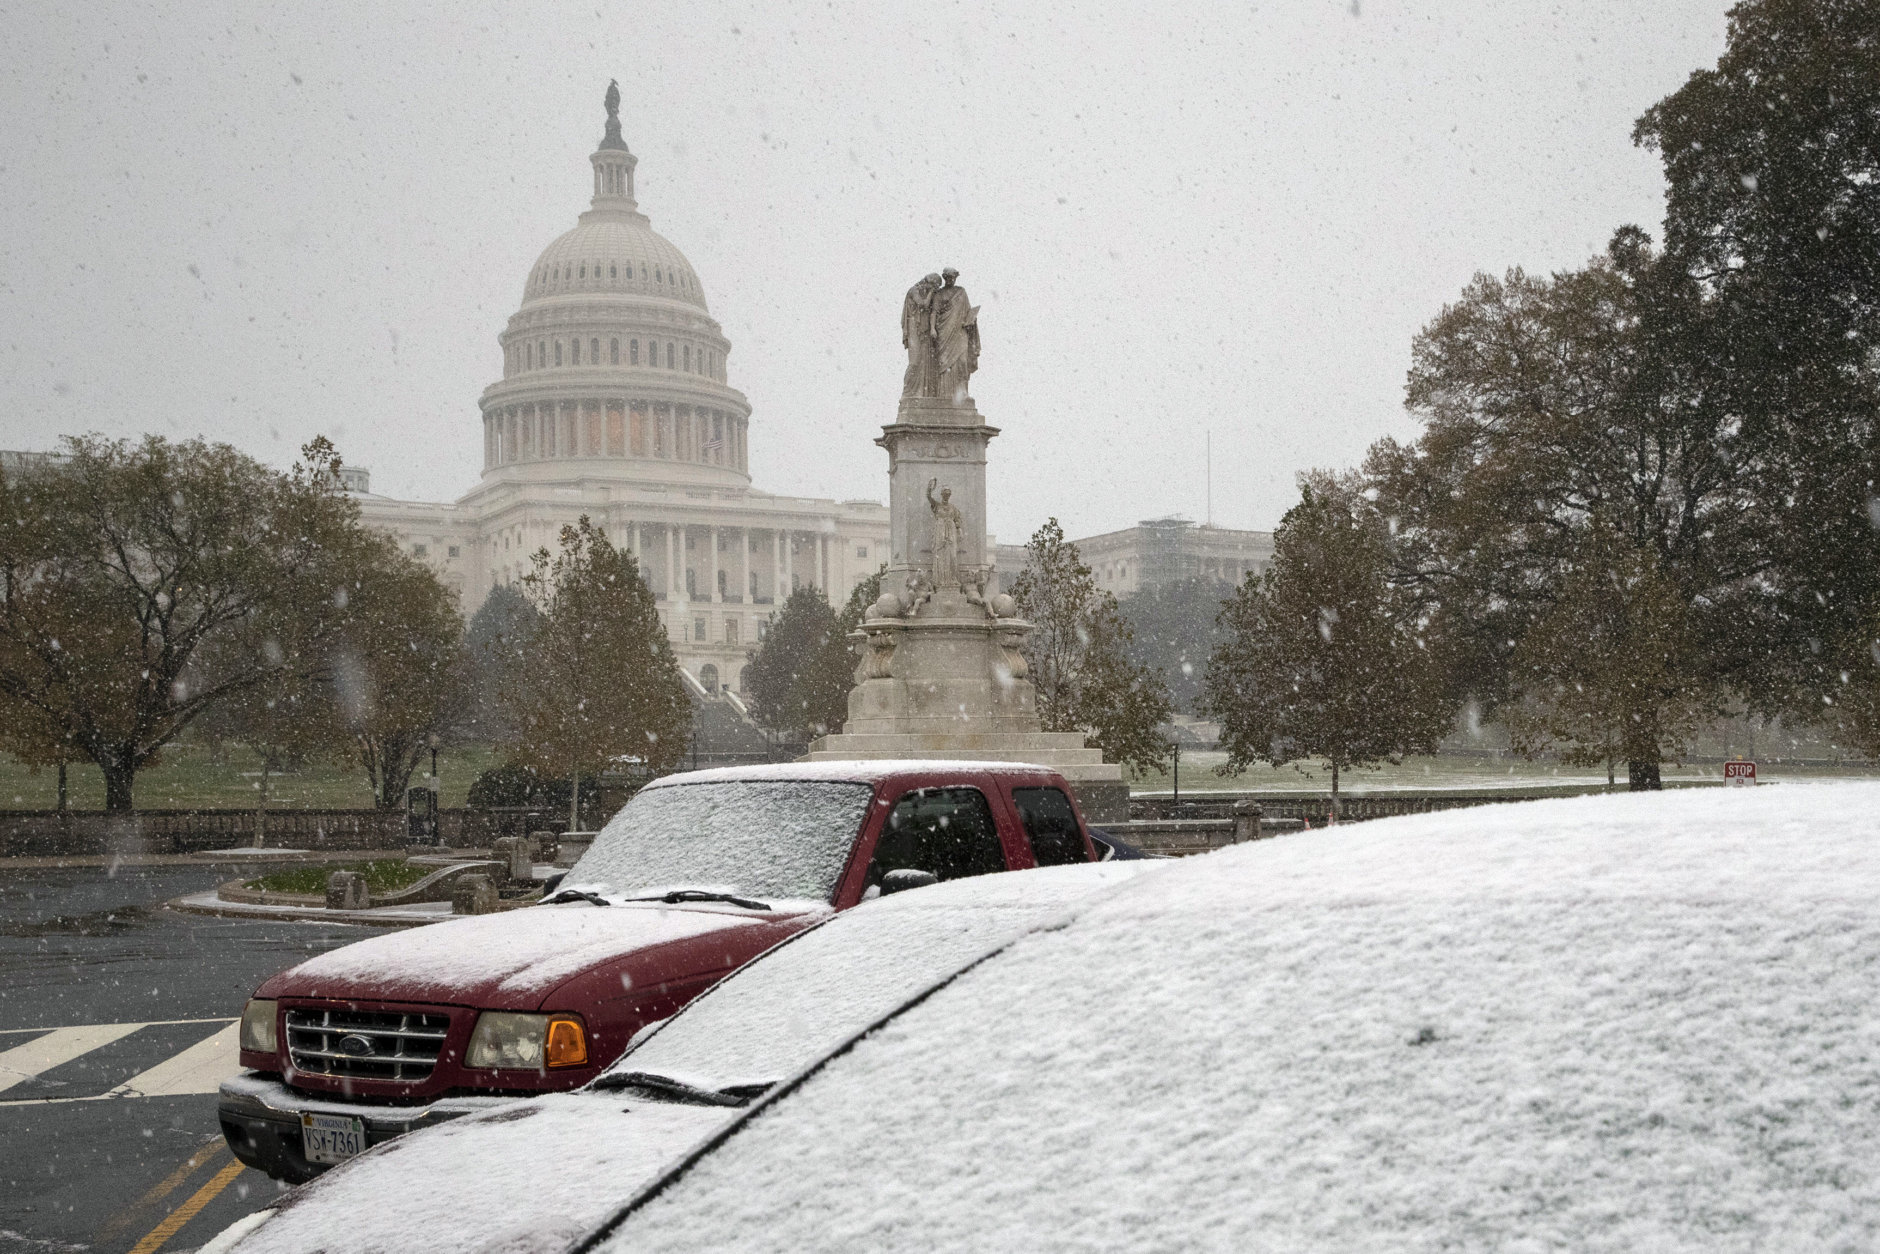 The first snow of the season falls on the Capitol in Washington, Thursday, Nov. 15, 2018. (AP Photo/J. Scott Applewhite)